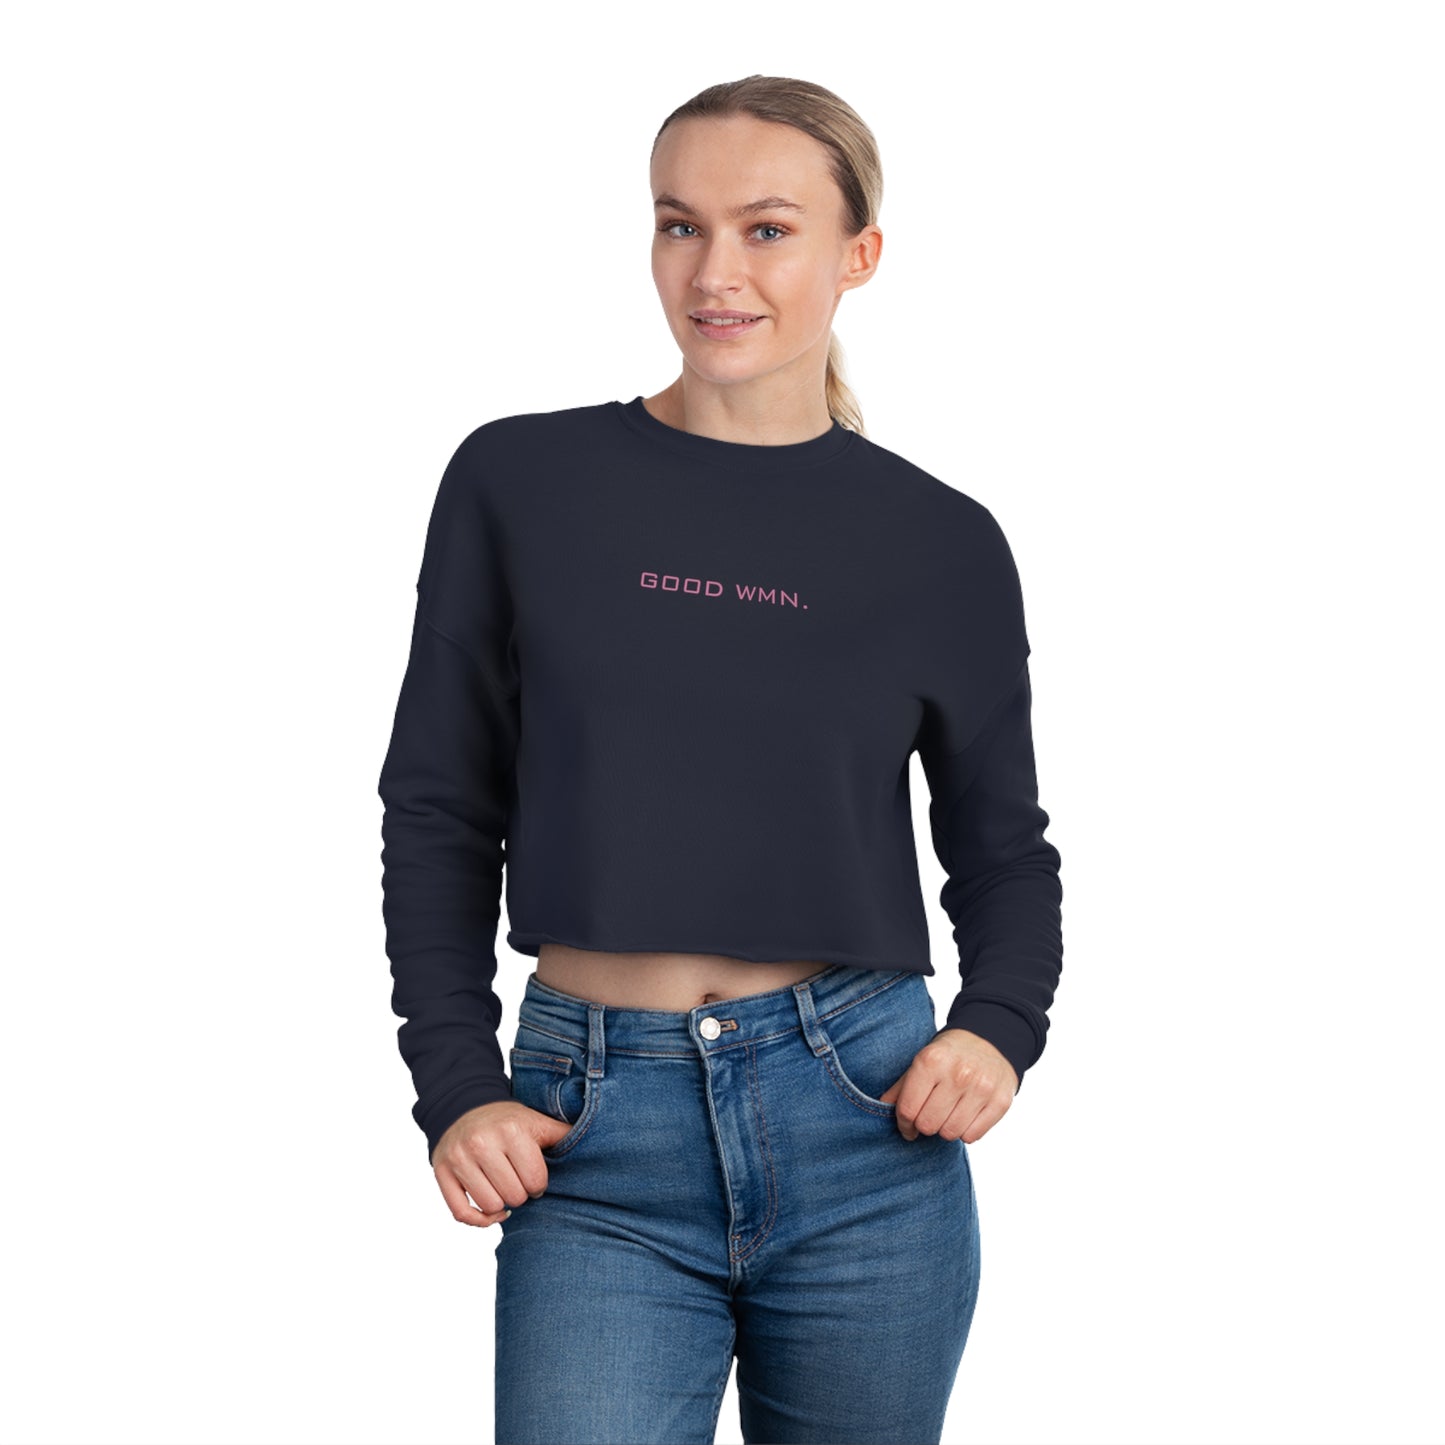 GOOD WMN sweatshirt | GOOD WOMAN Women's Cropped Sweatshirt